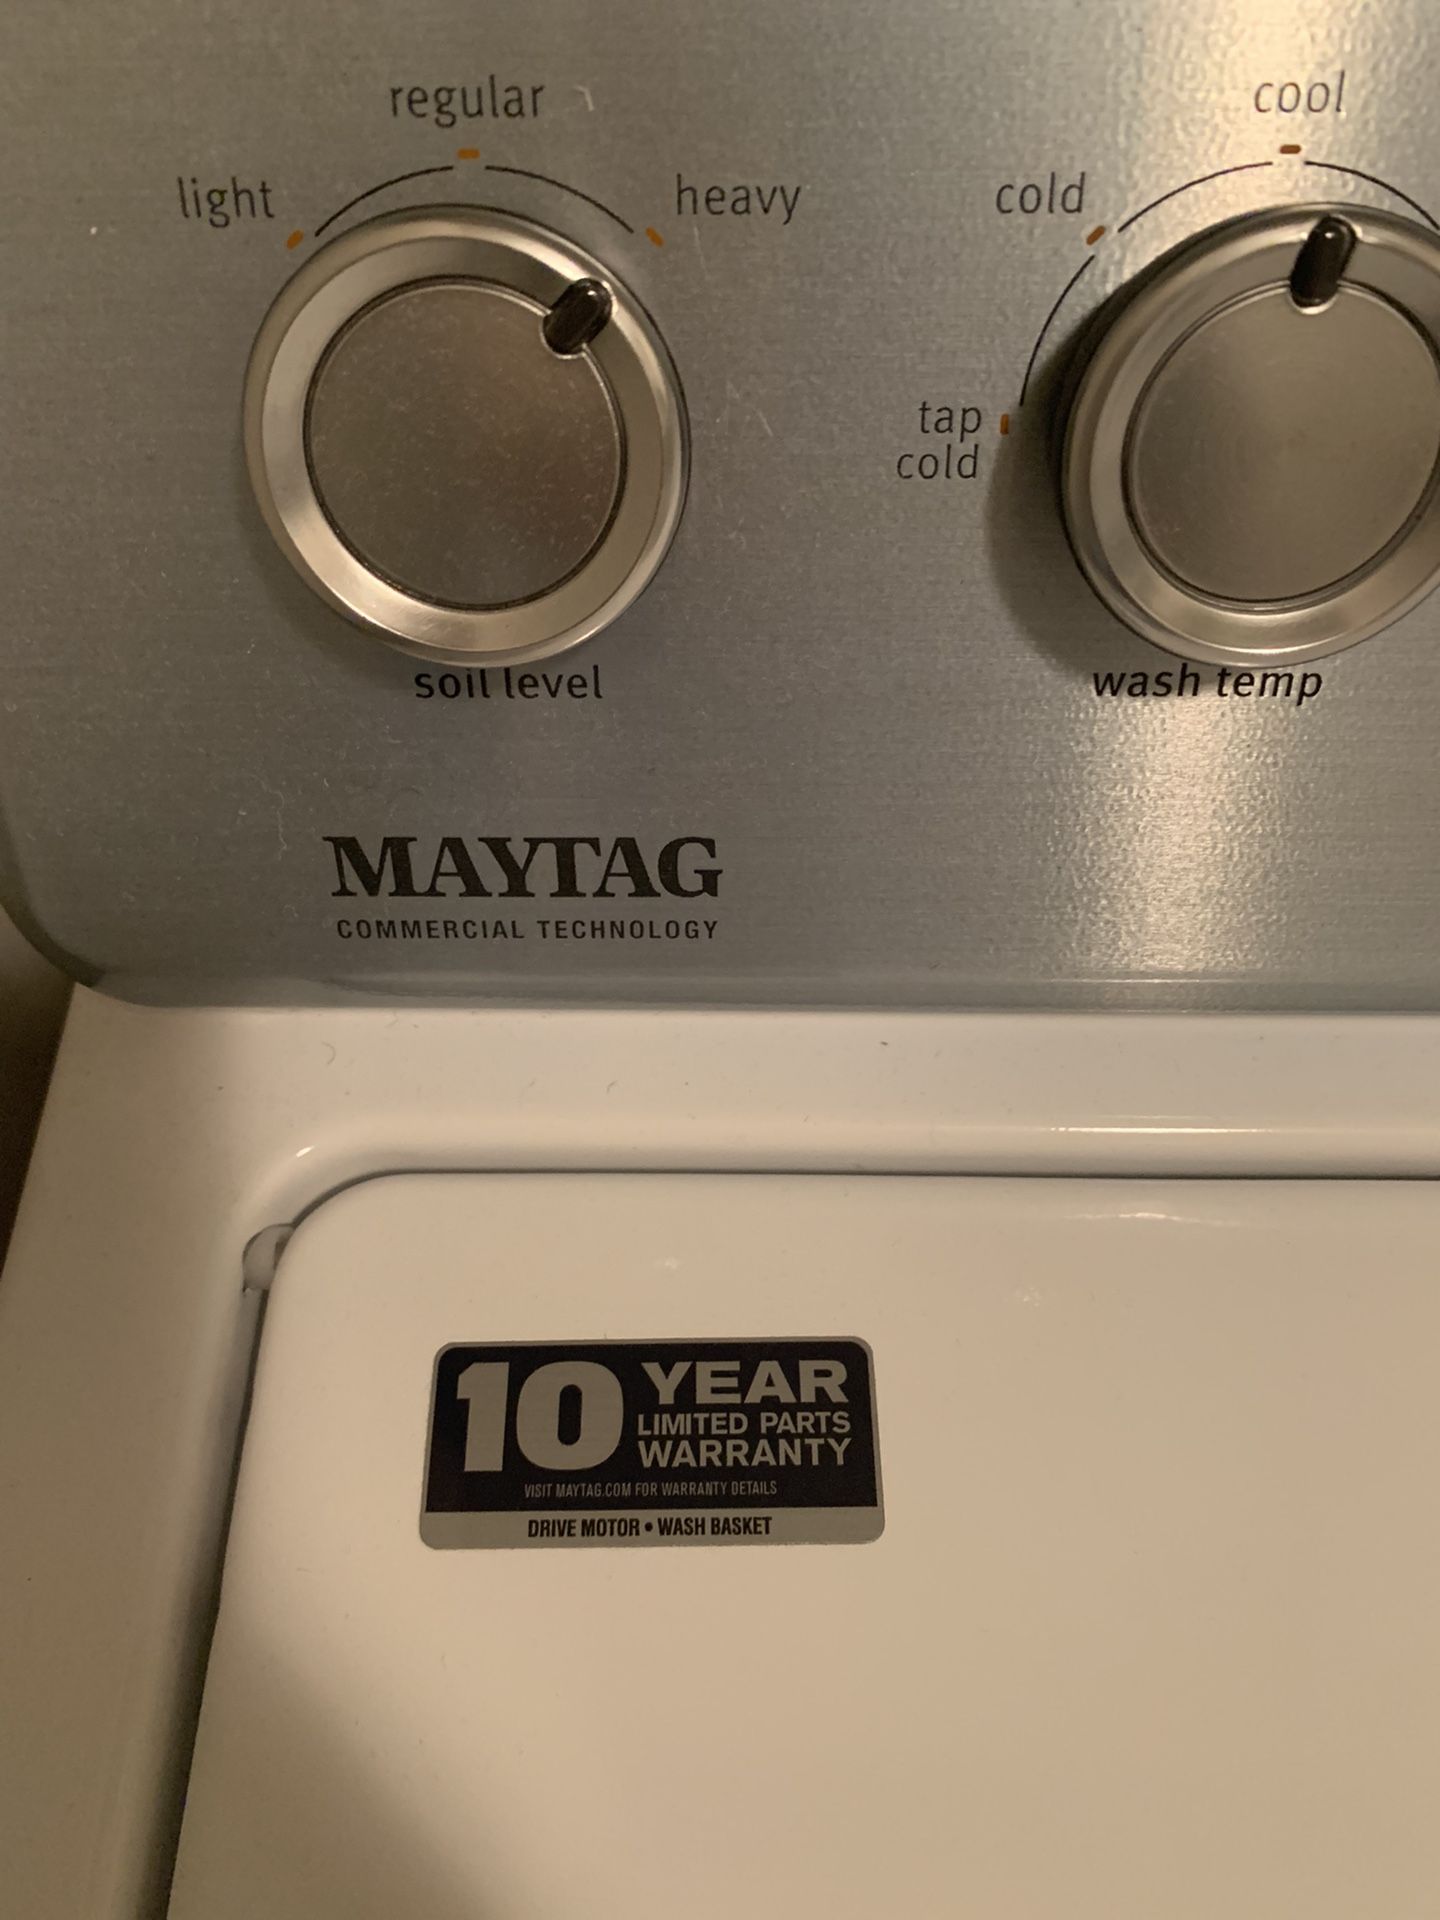 Maytag Large Capacity Top Load Washer